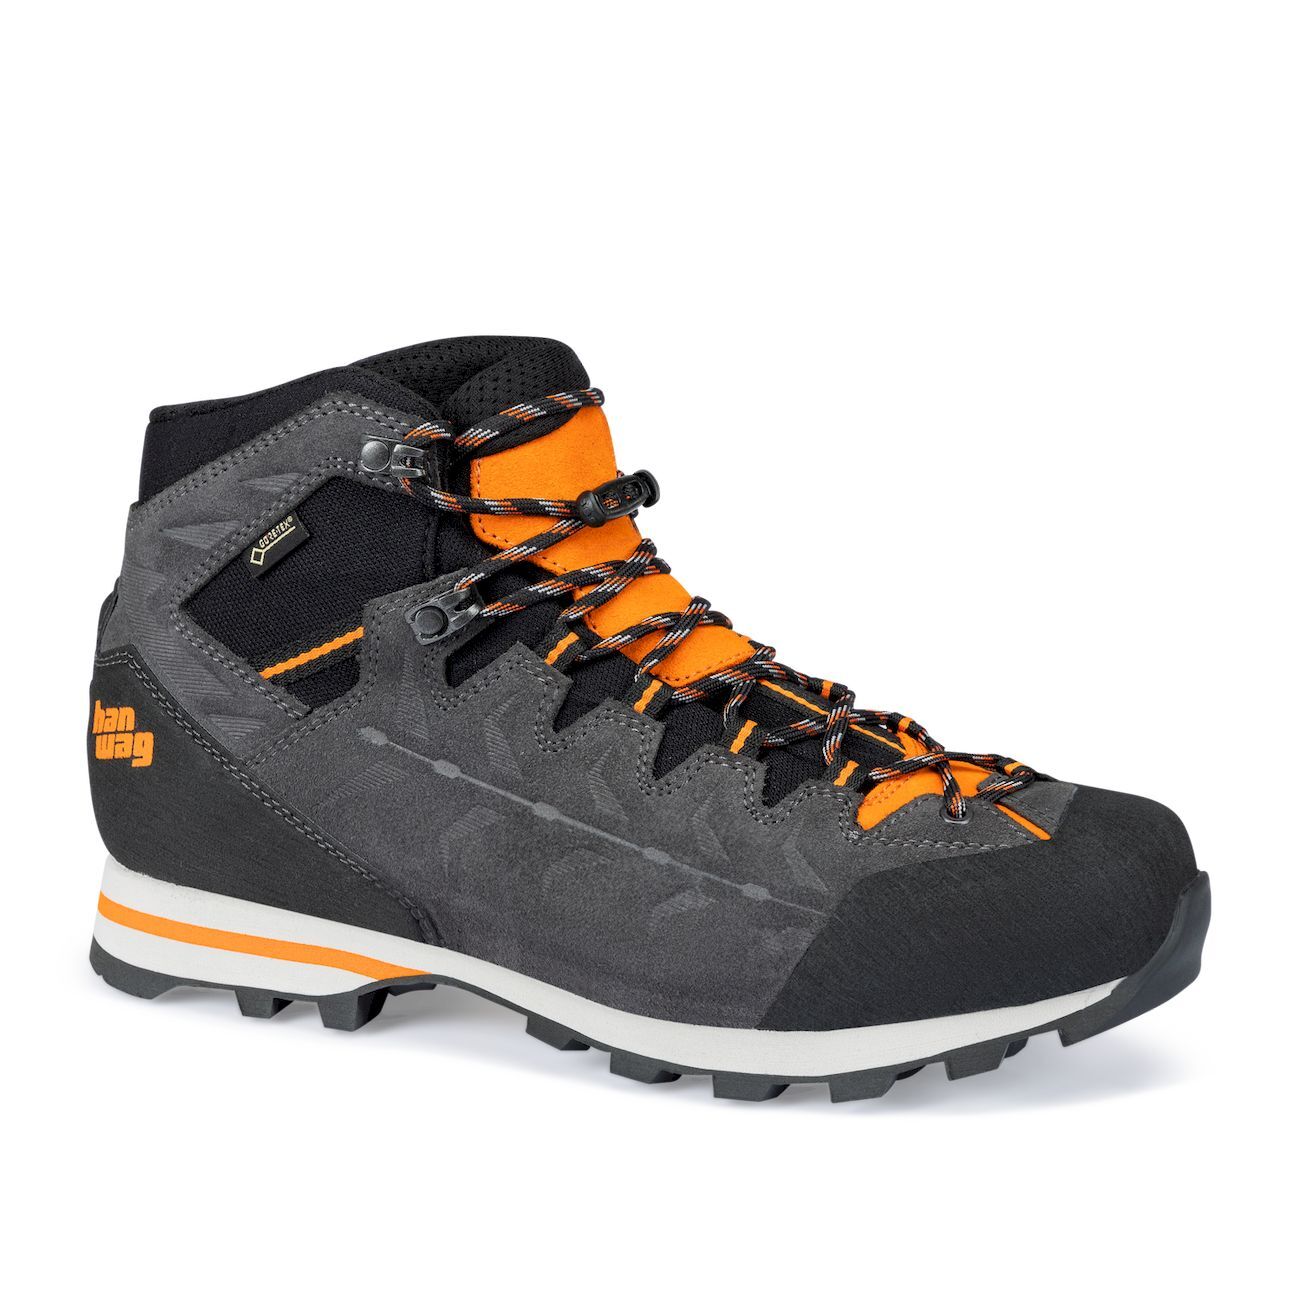 Hanwag Makra Light GTX - Hiking shoes - Men's